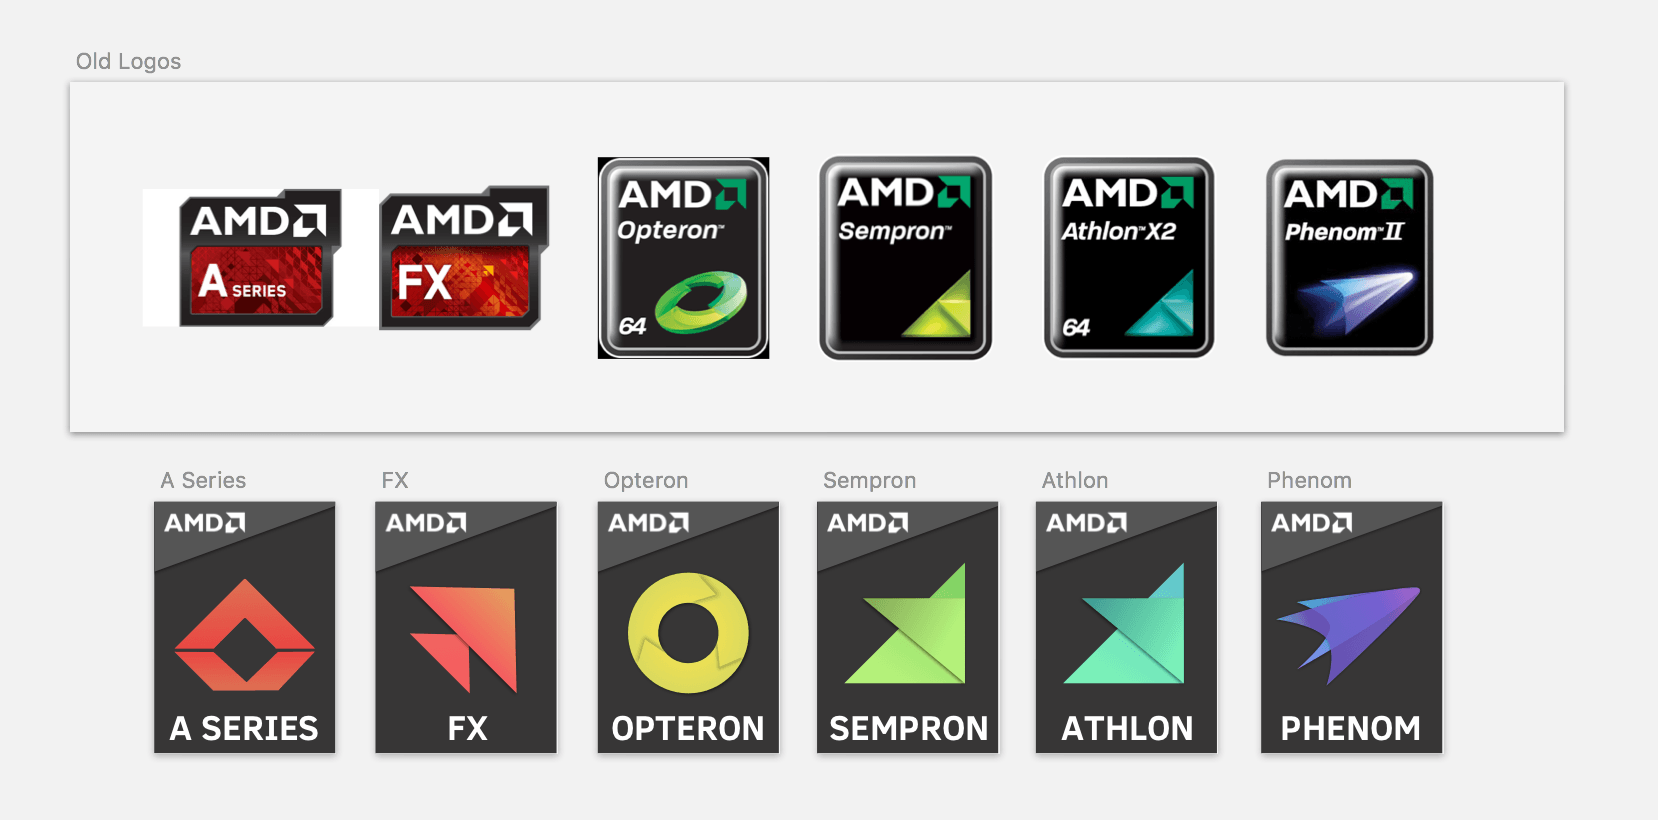 Old AMD Logo - AMD Ryzen Sticker Redesign? : Amd